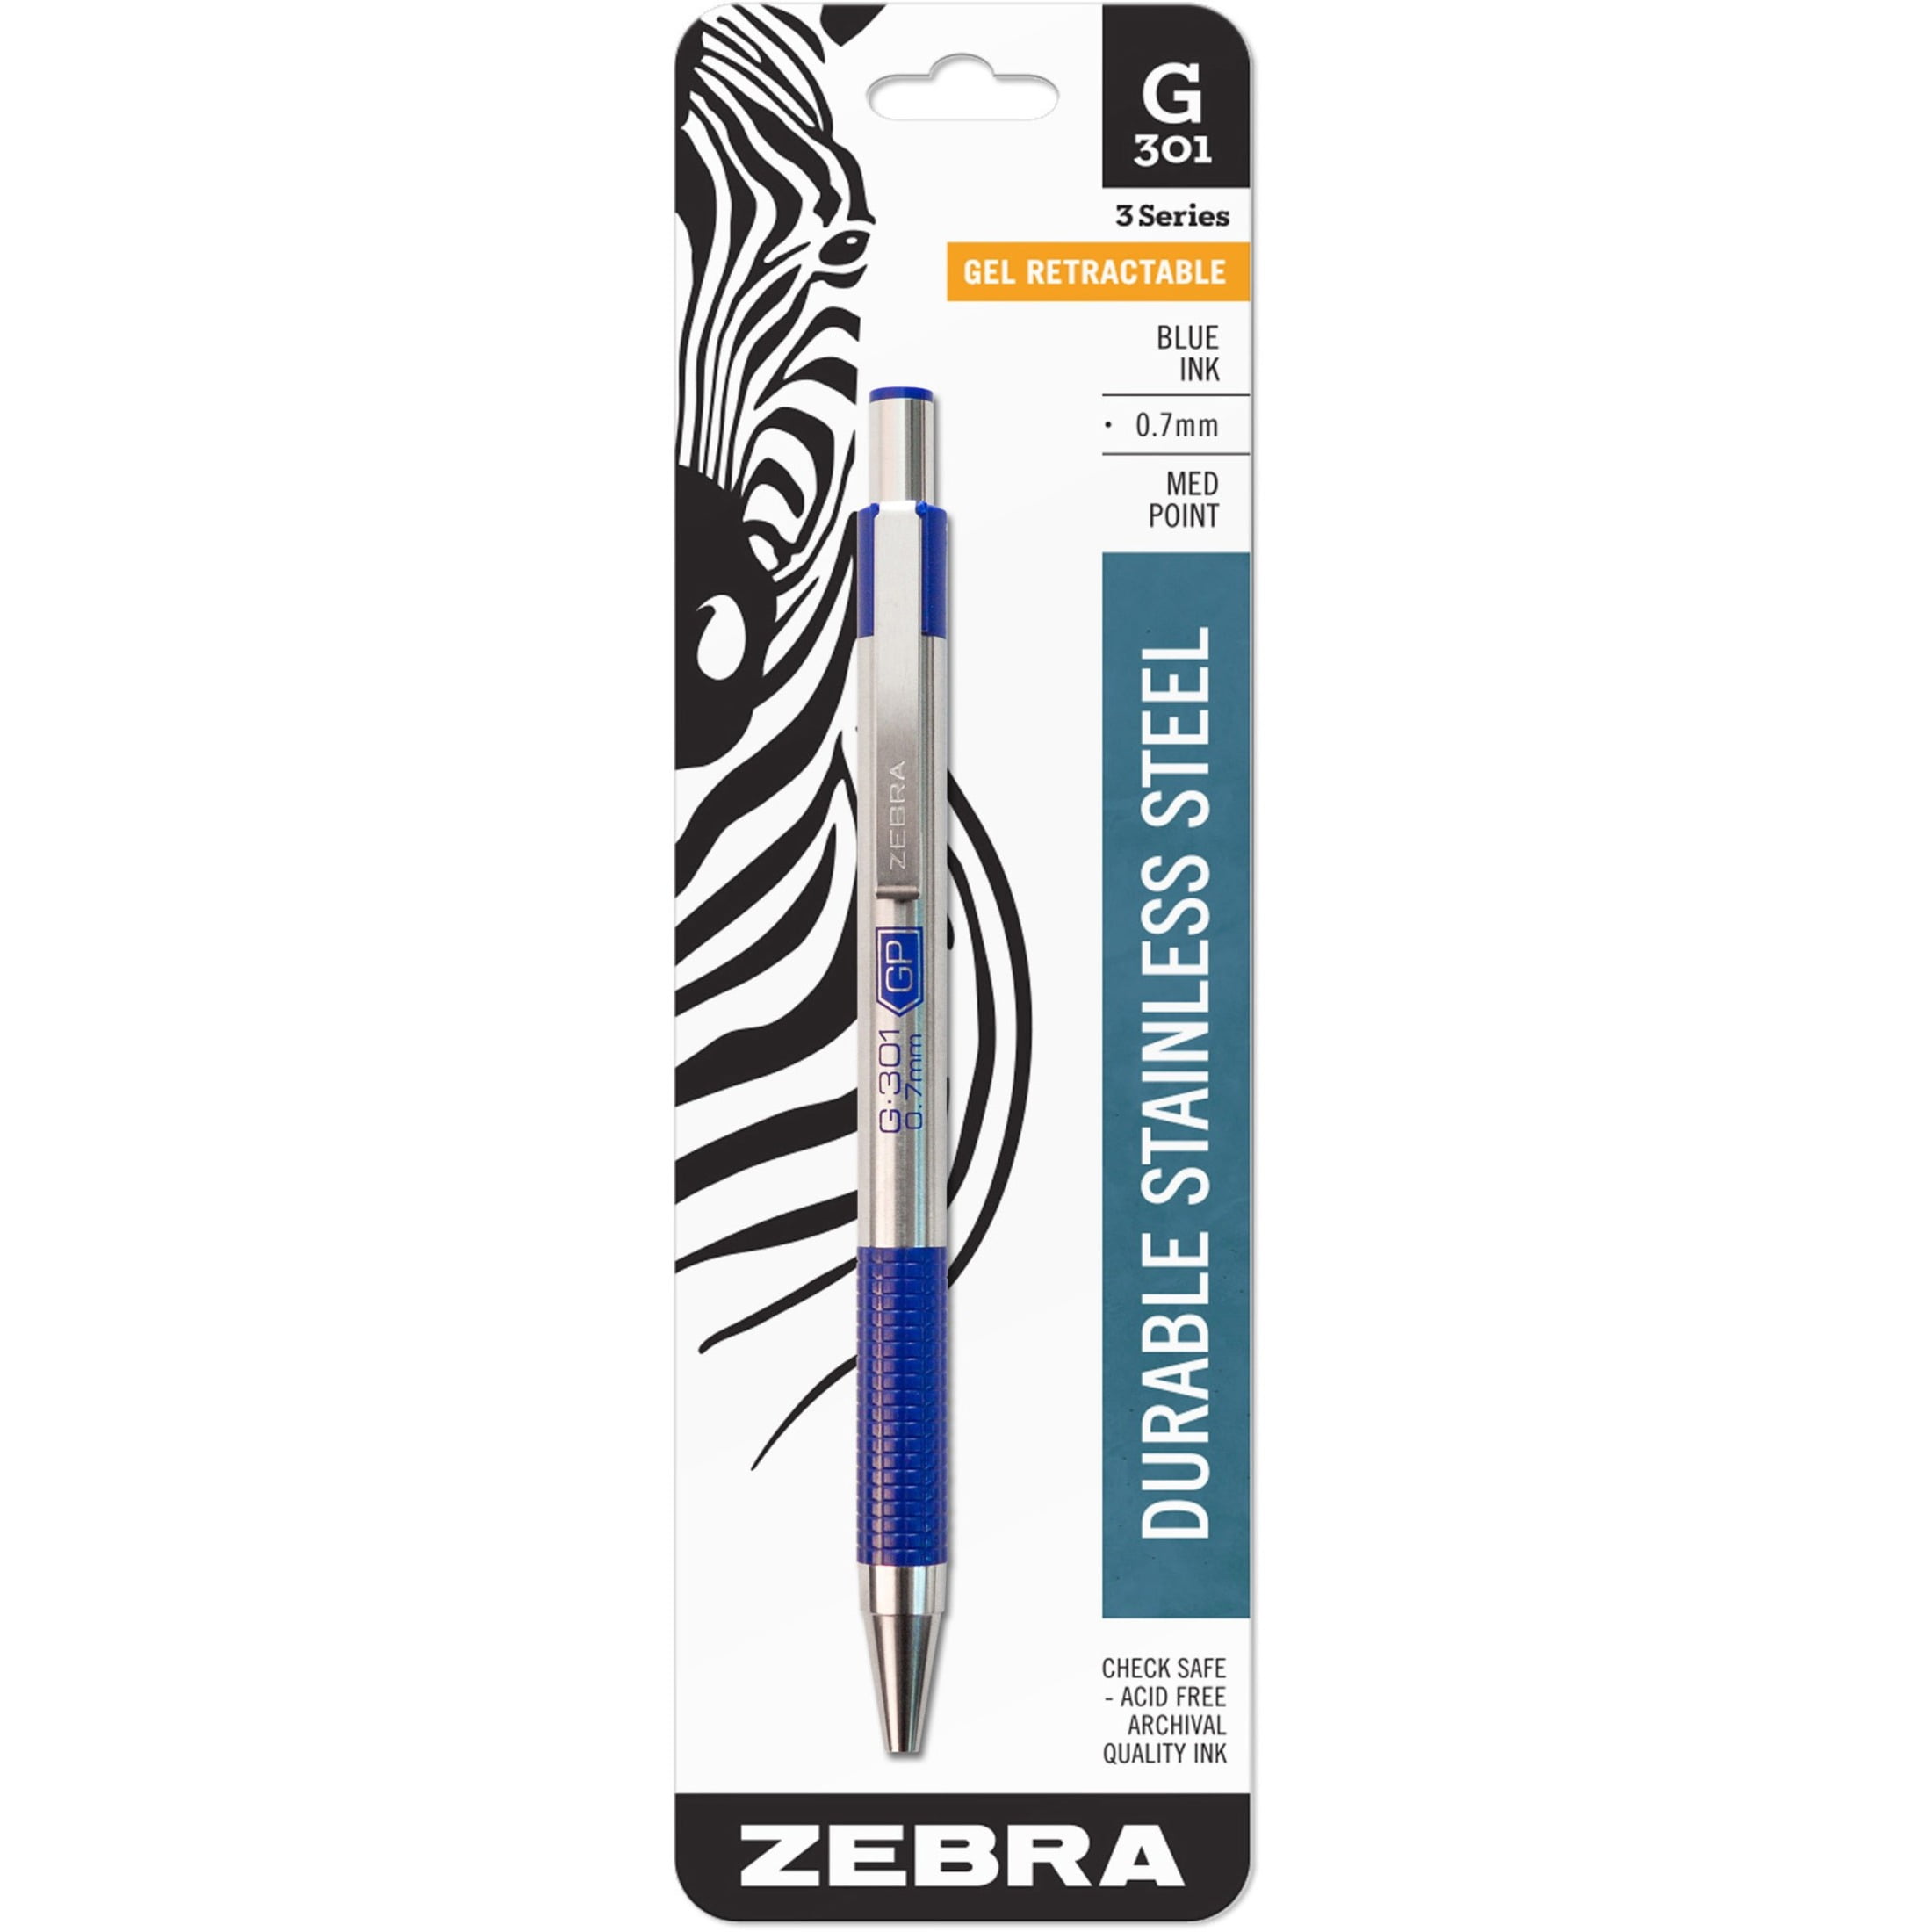 Zebra Pen G-301 Gel Retractable 0.7mm Blue 1-pack Zebra Pen 41321 